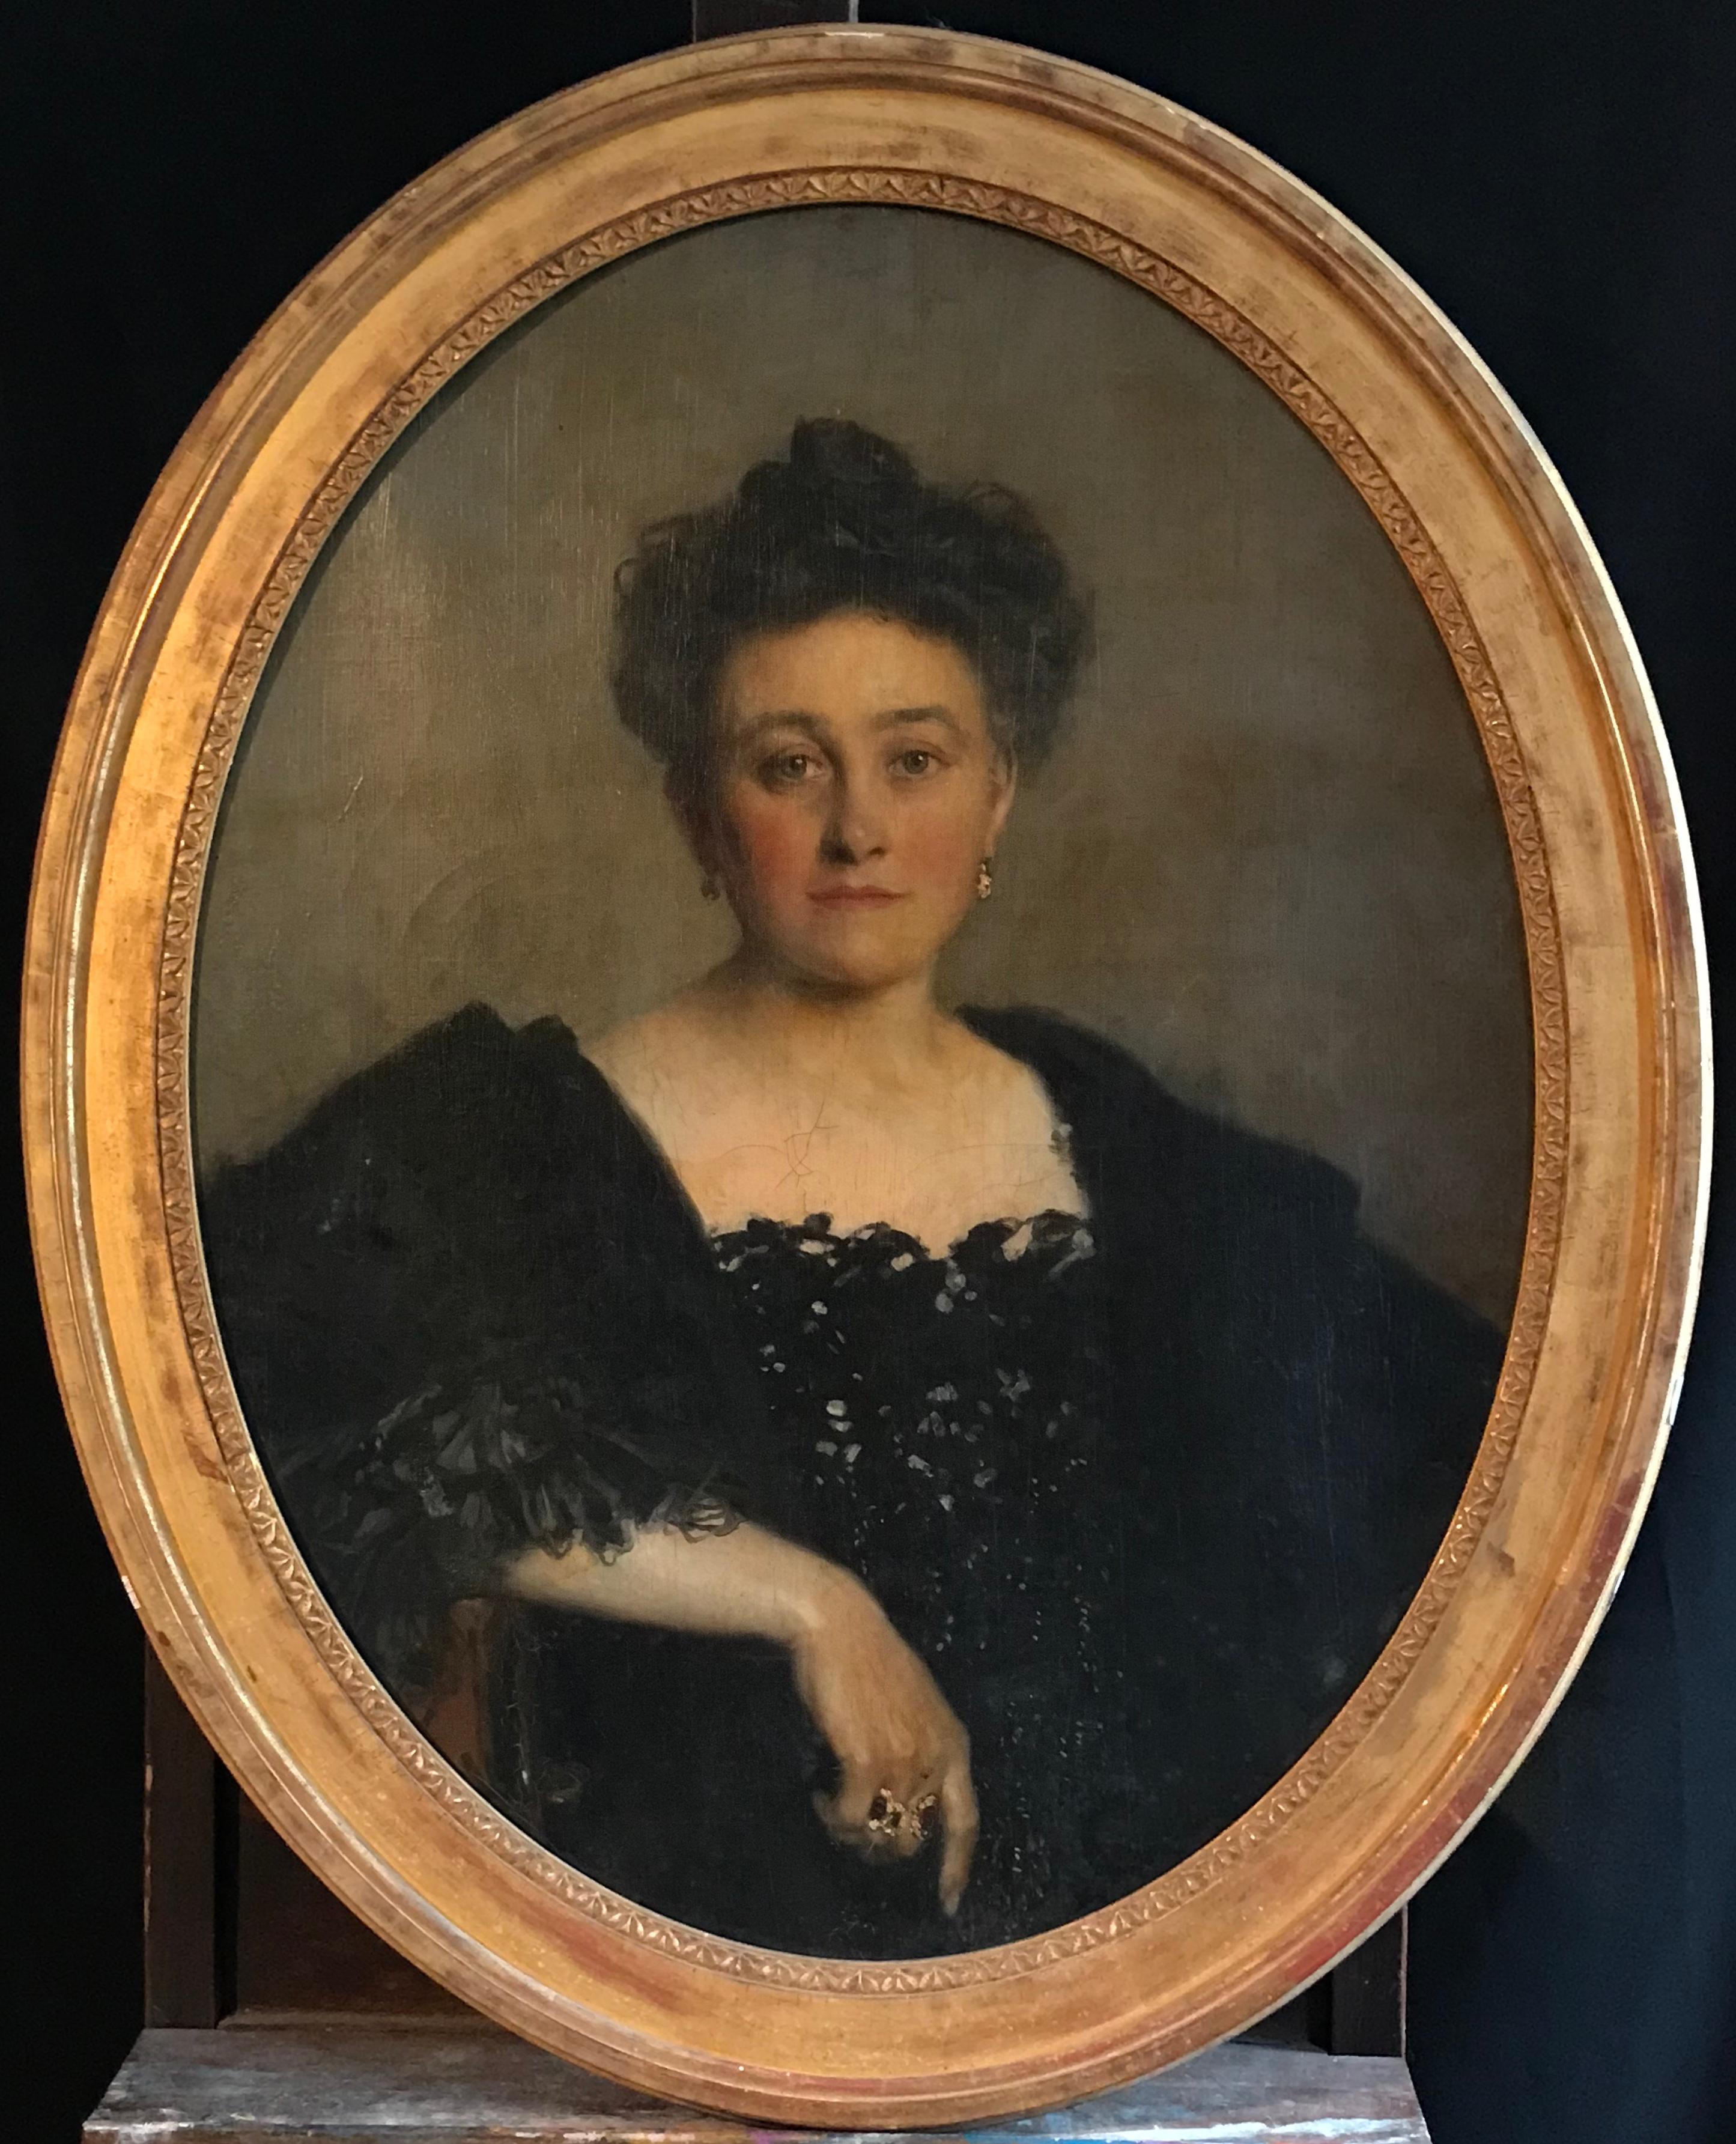 François Flameng Portrait Painting - Portrait of a Lady 1904 in a Black Dress, Large Oval Oil on Canvas